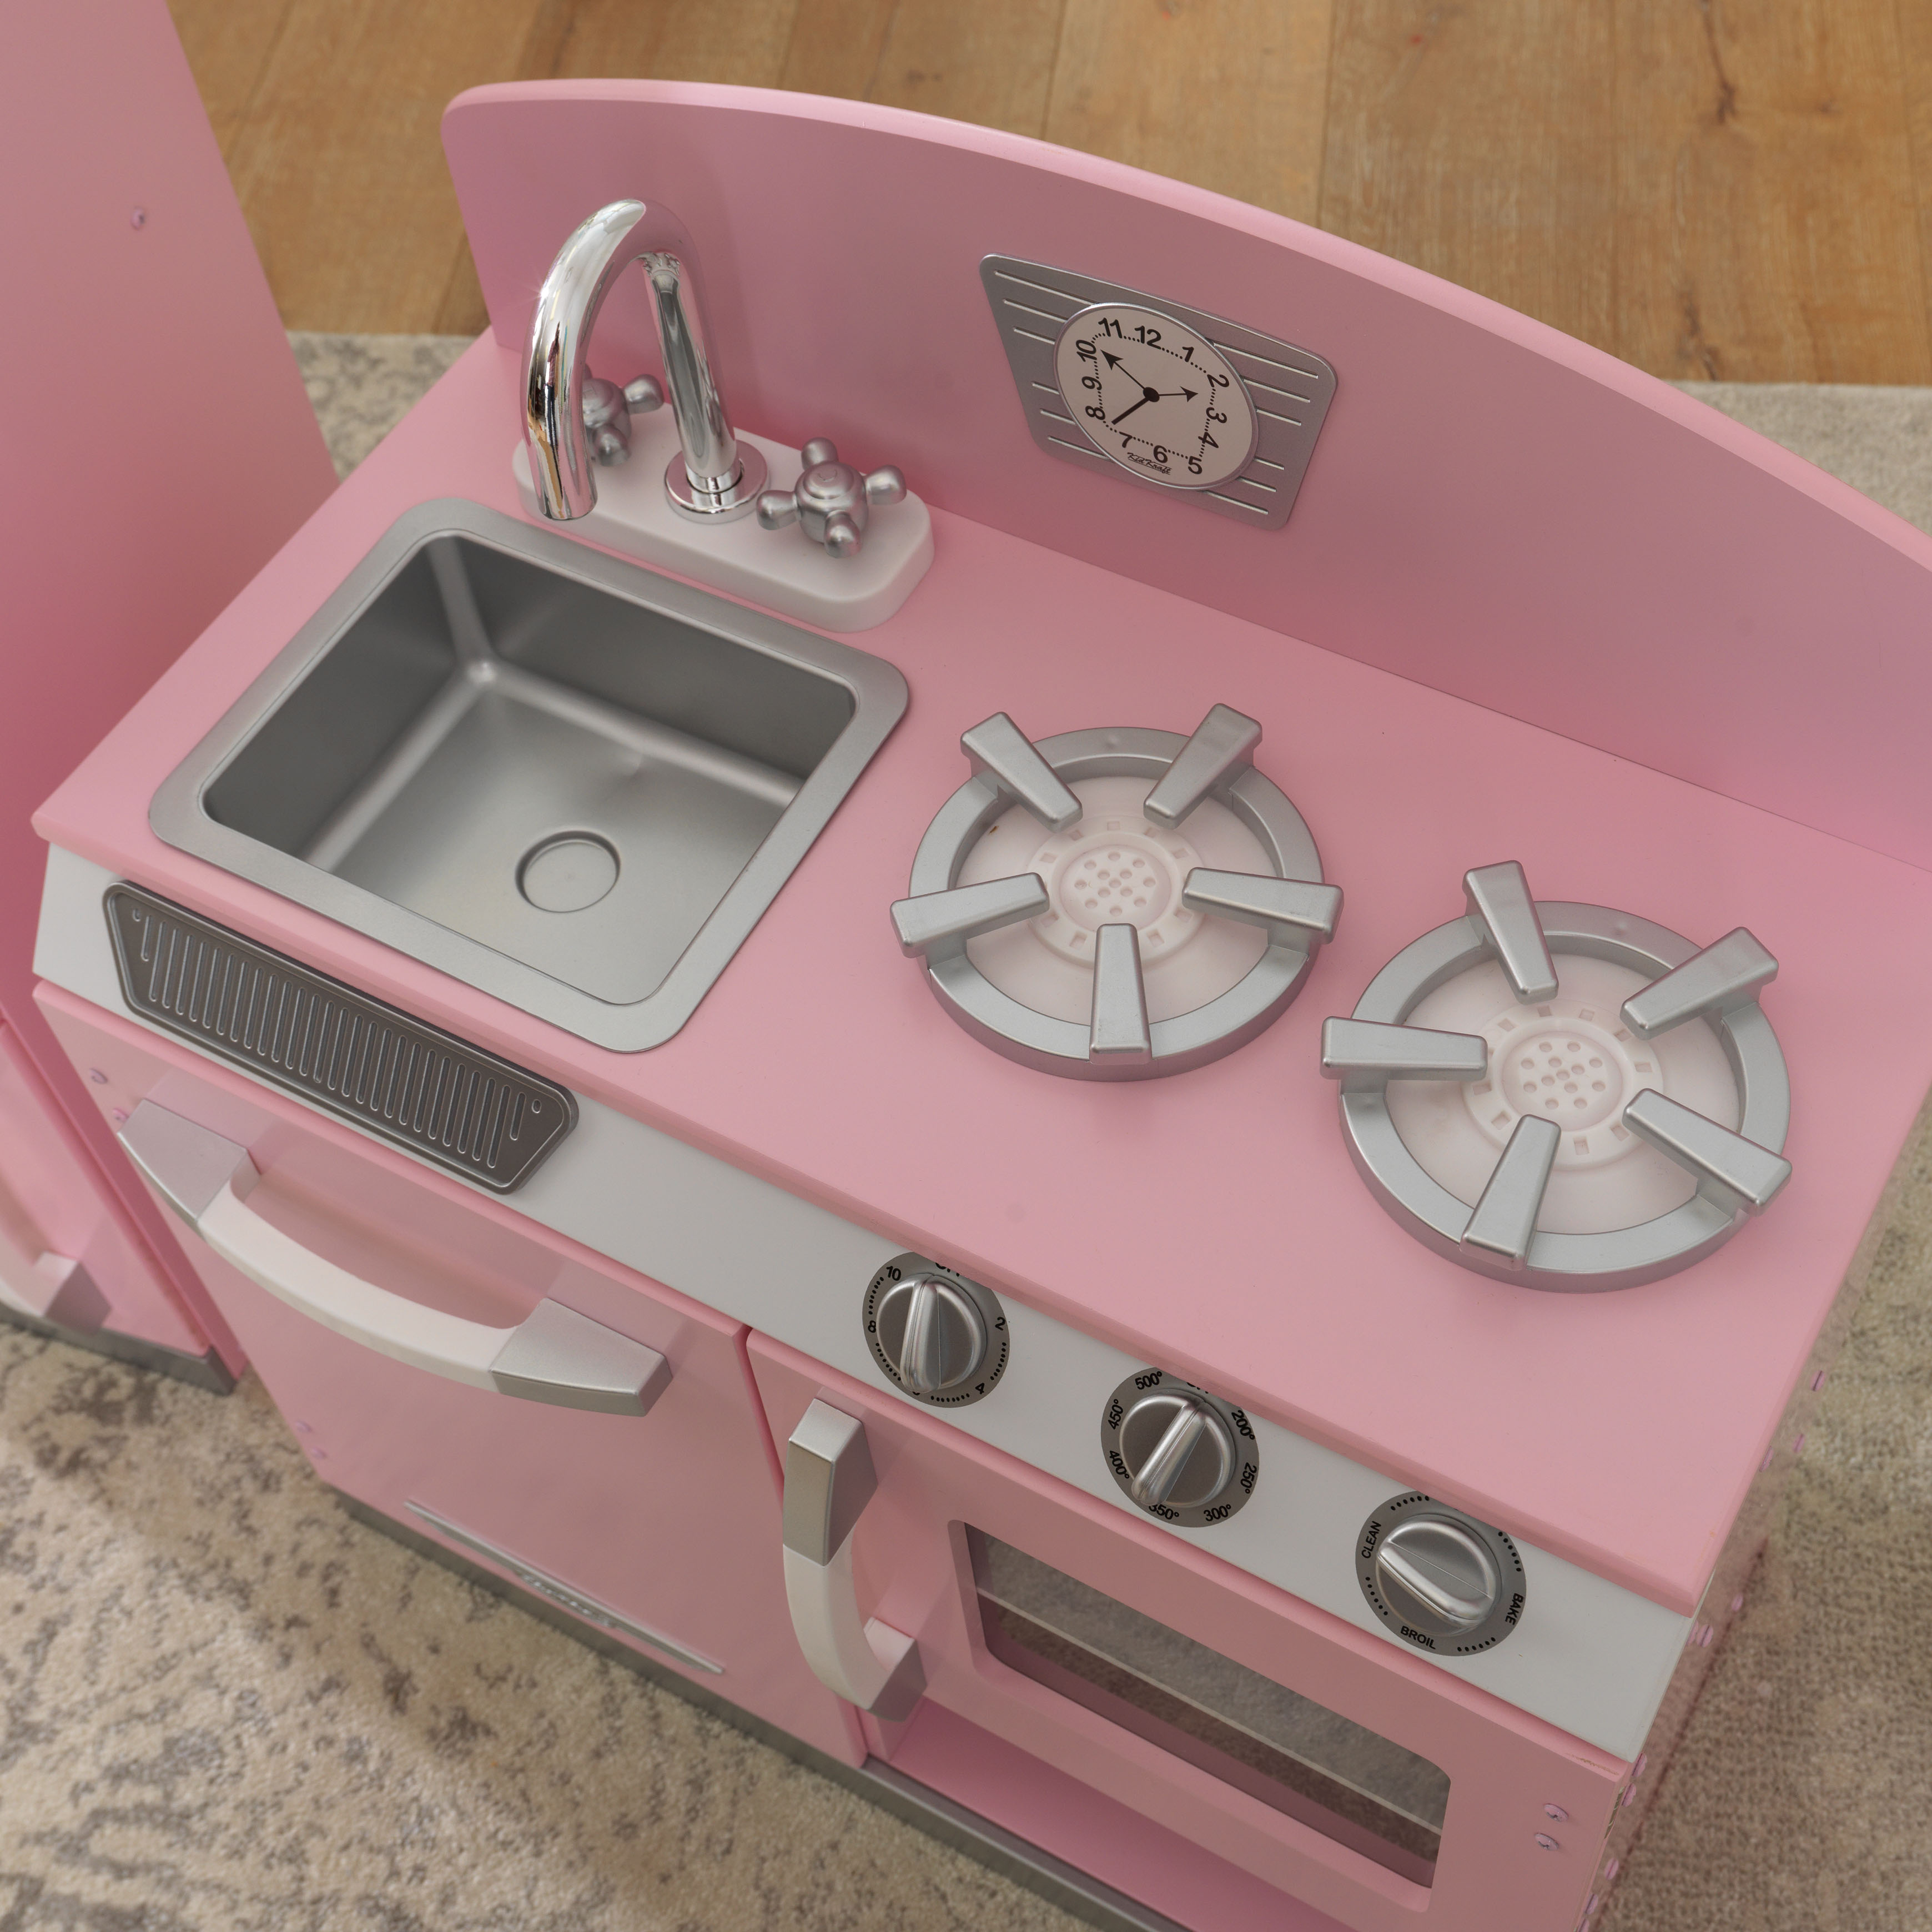 KidKraft Pink Retro Wooden Play Kitchen and Refrigerator 2-Piece Set - image 3 of 14